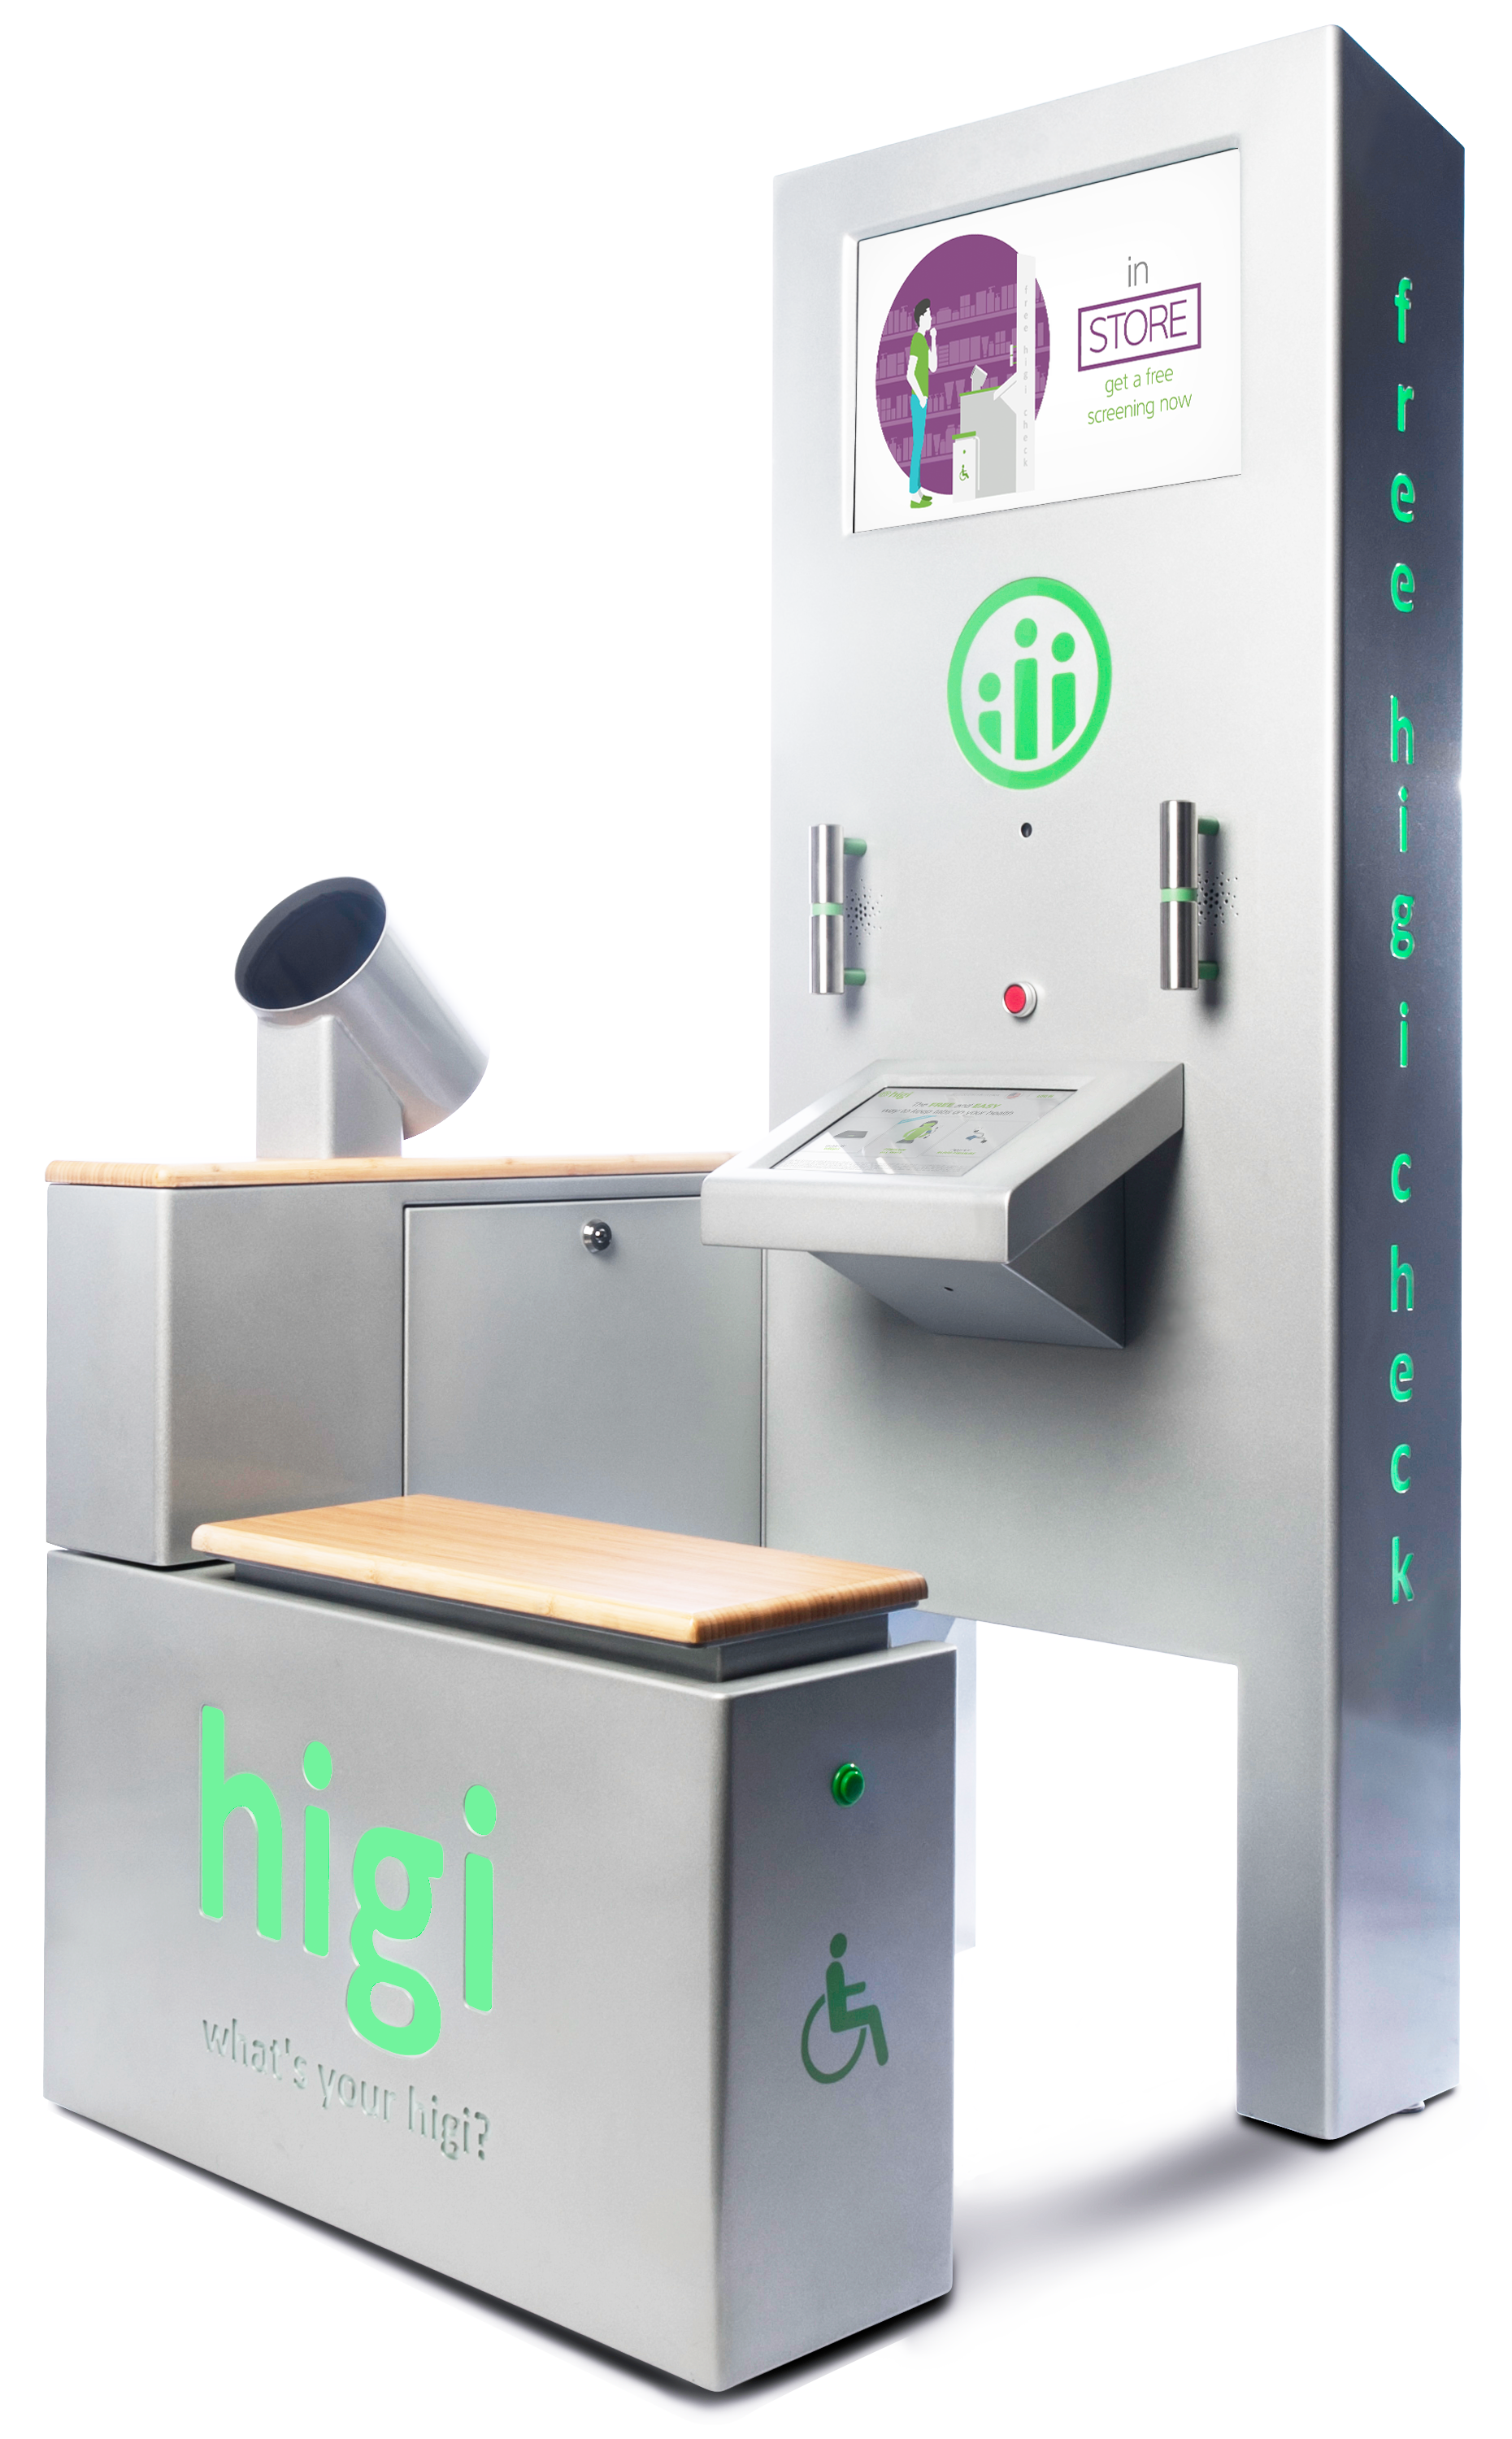 self-service health kiosks developed by startup Higi